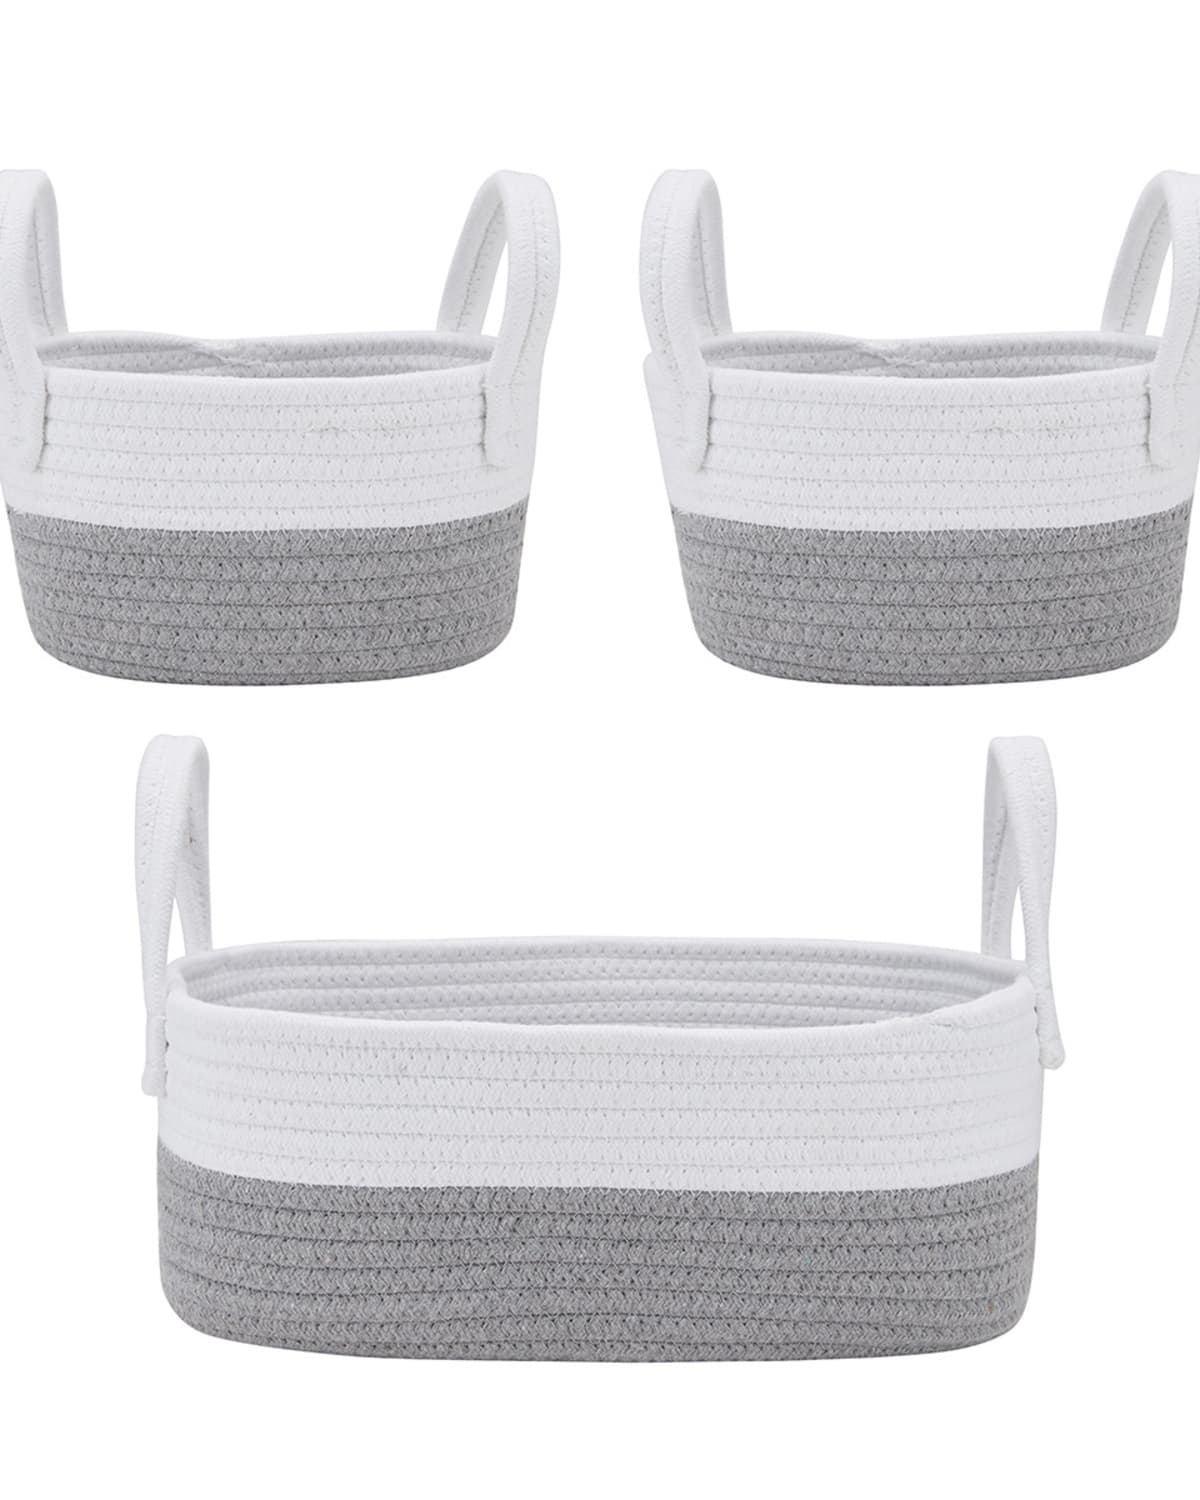 3 Pack Nestled Storage Baskets - White and Grey - Kmart